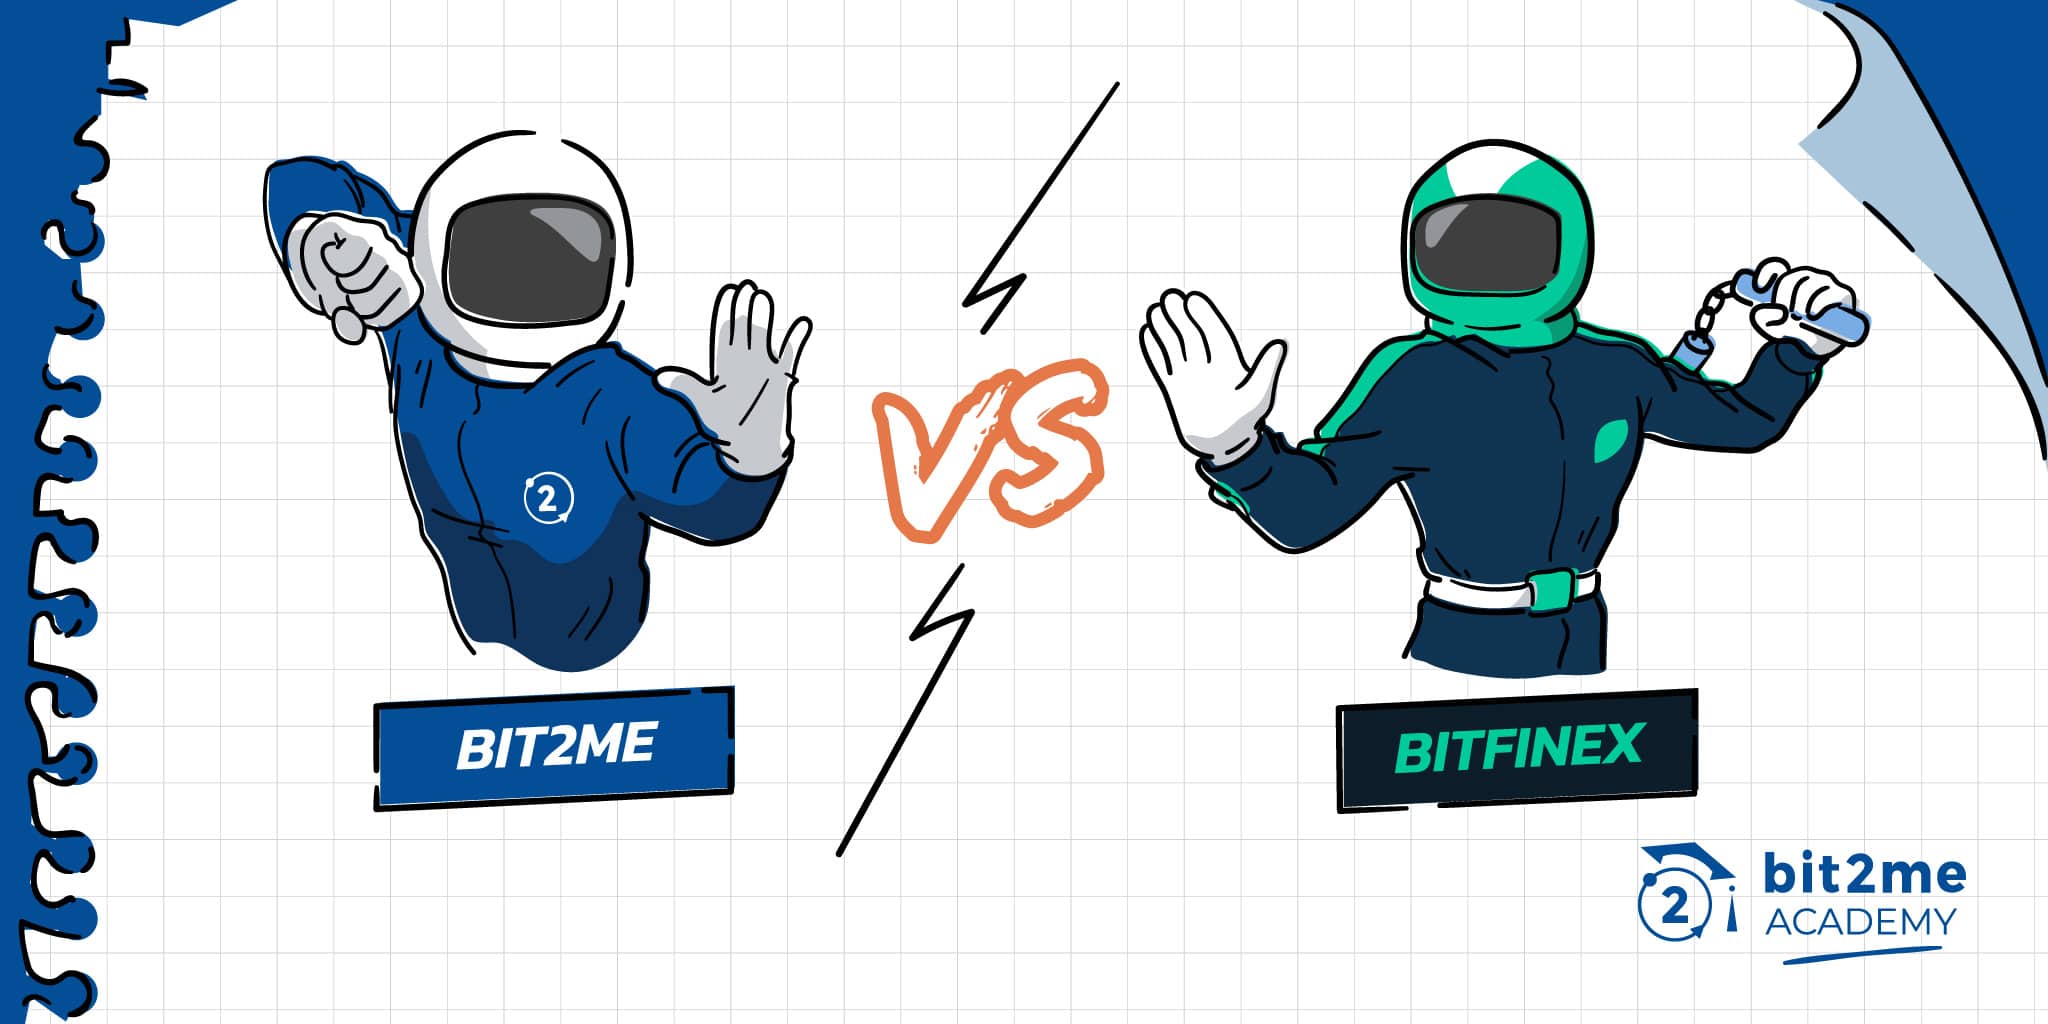 Detailed comparison between Bit2Me and Bitfinex